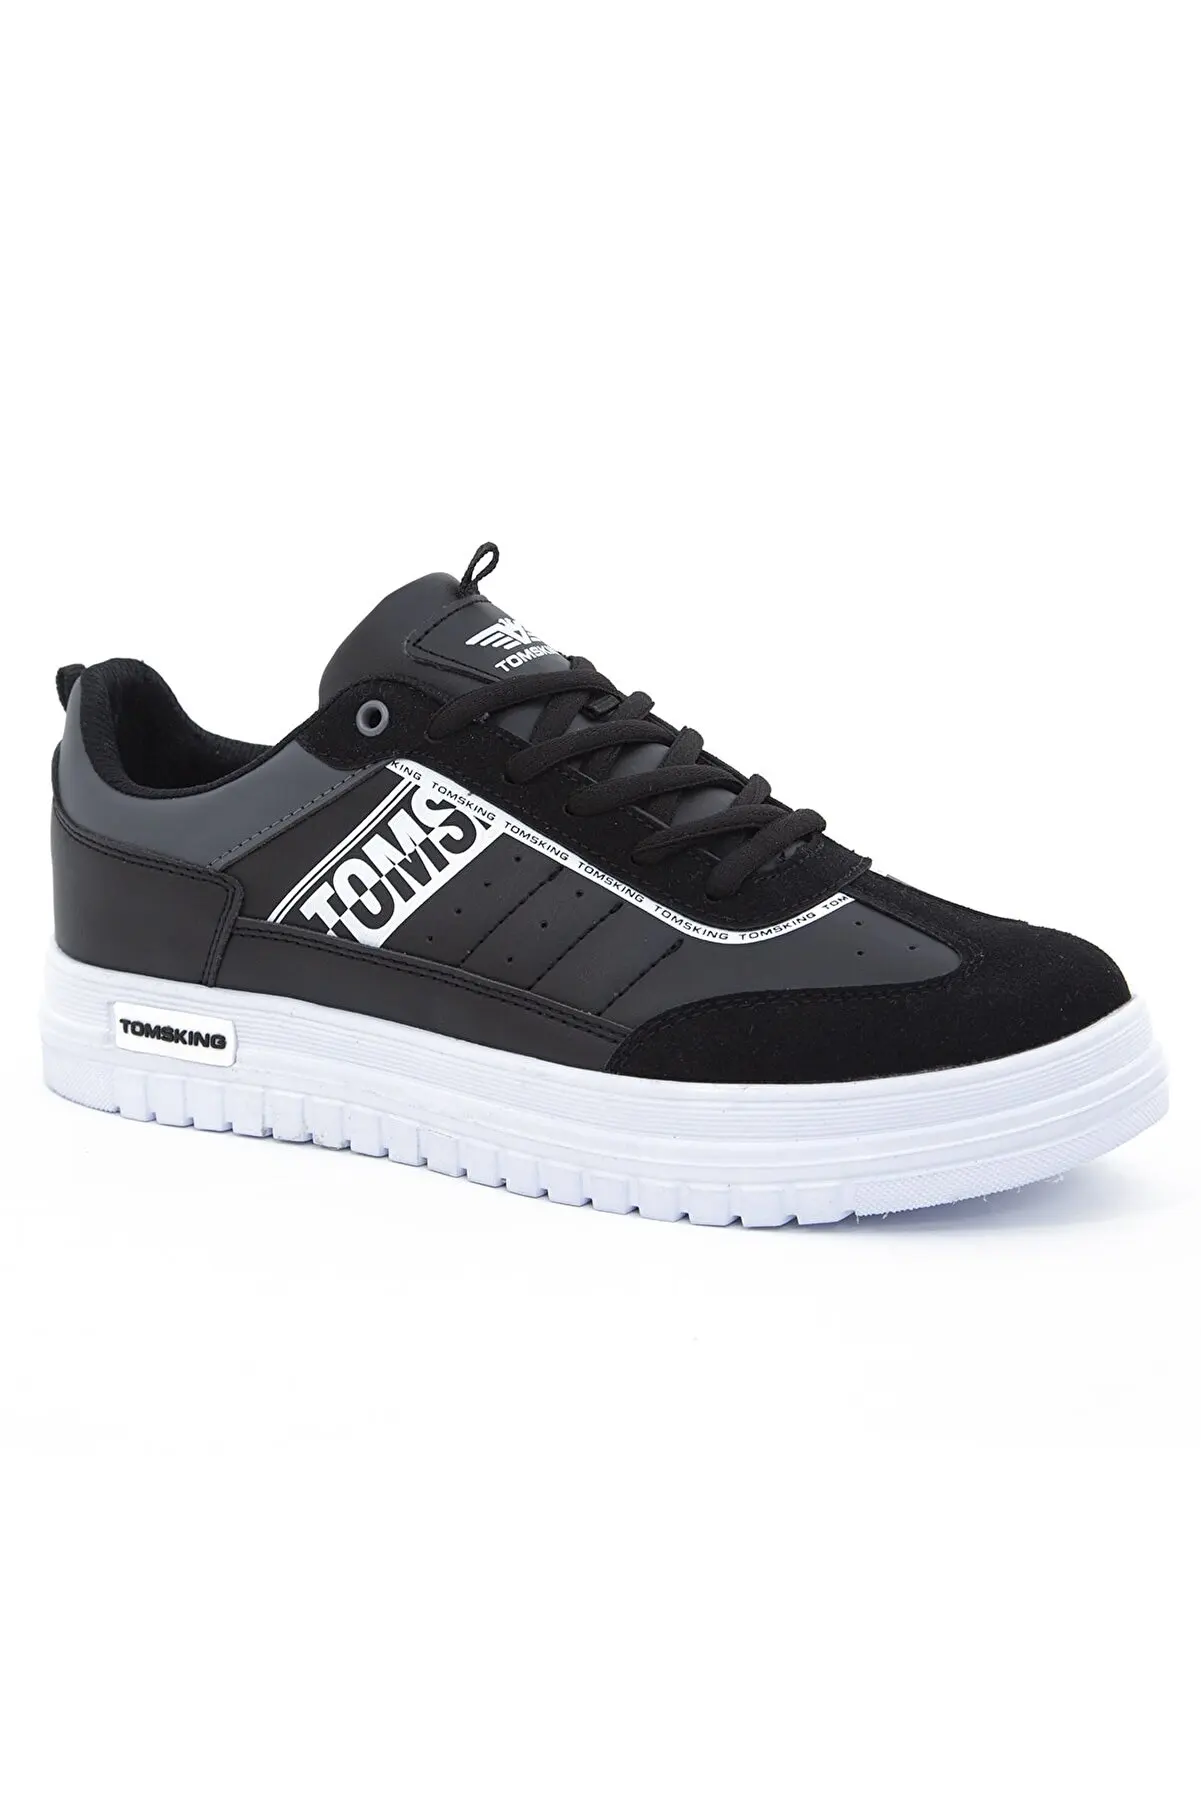 Men Black White Casual Sneaker, Men's Color Black Shoes, New Fashion  White Casual Men Sneakers, Non-slip Sports Shoes